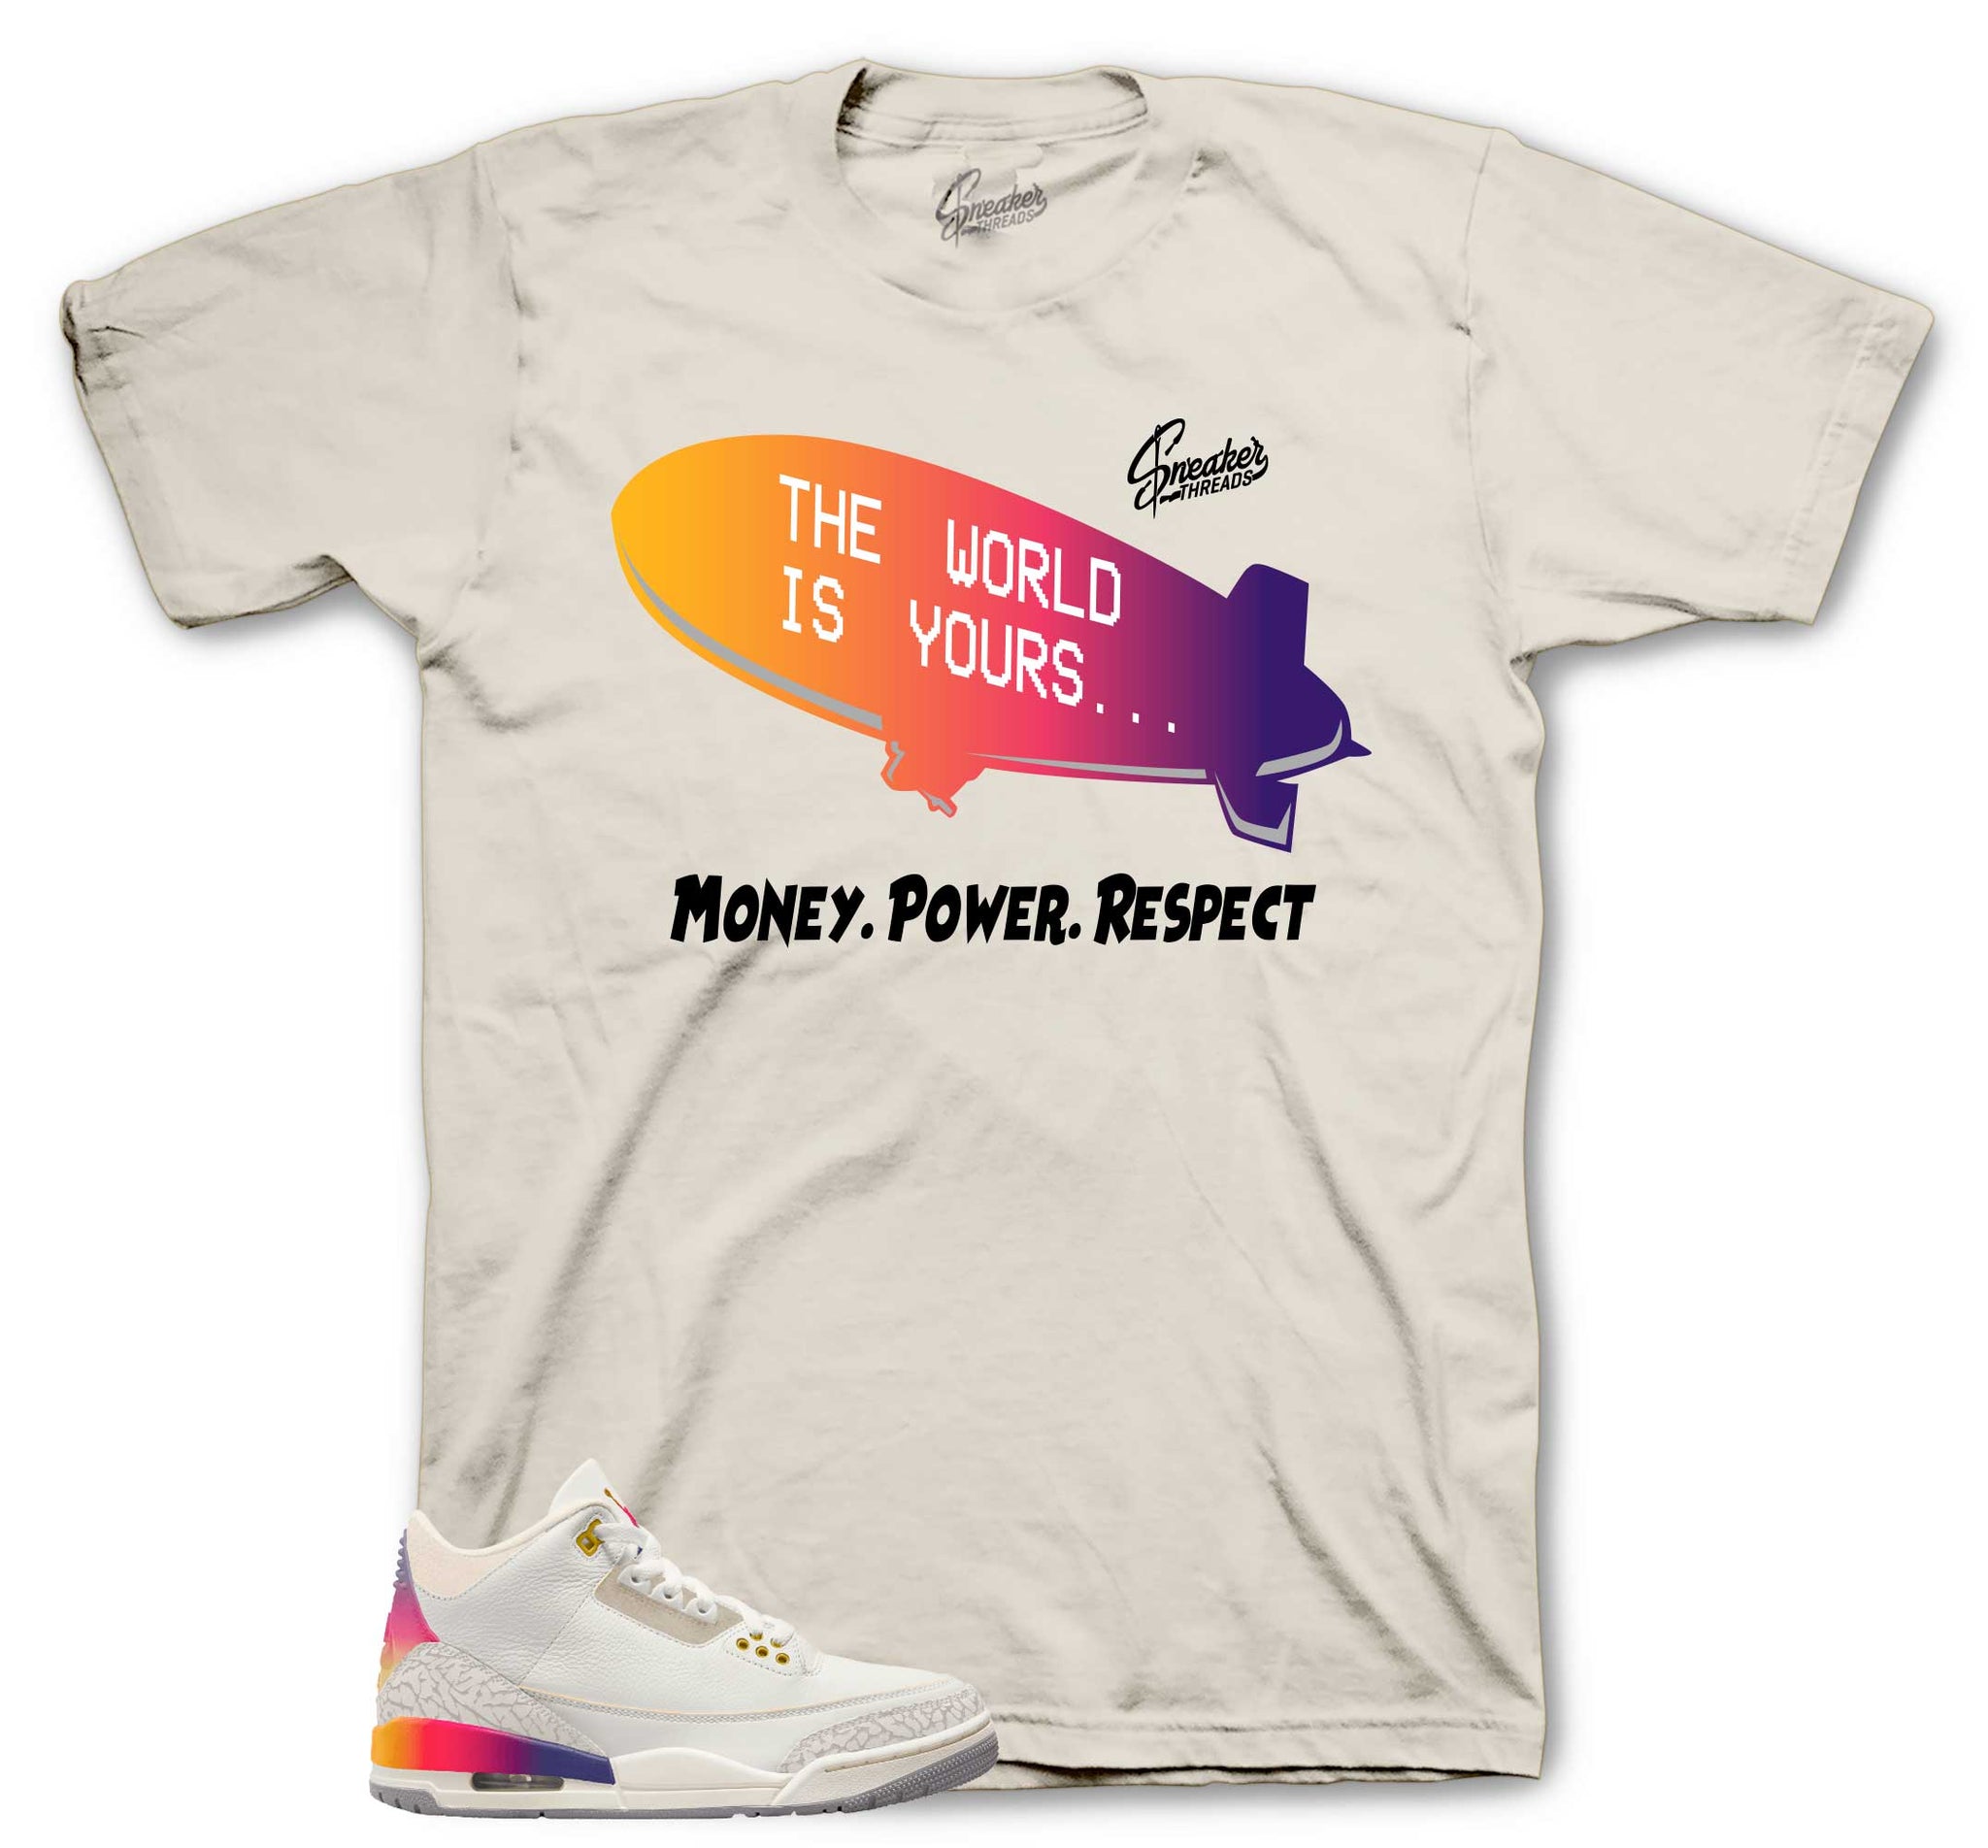 Retro 3 Sunset Shirt - Money Power Respect - Natural